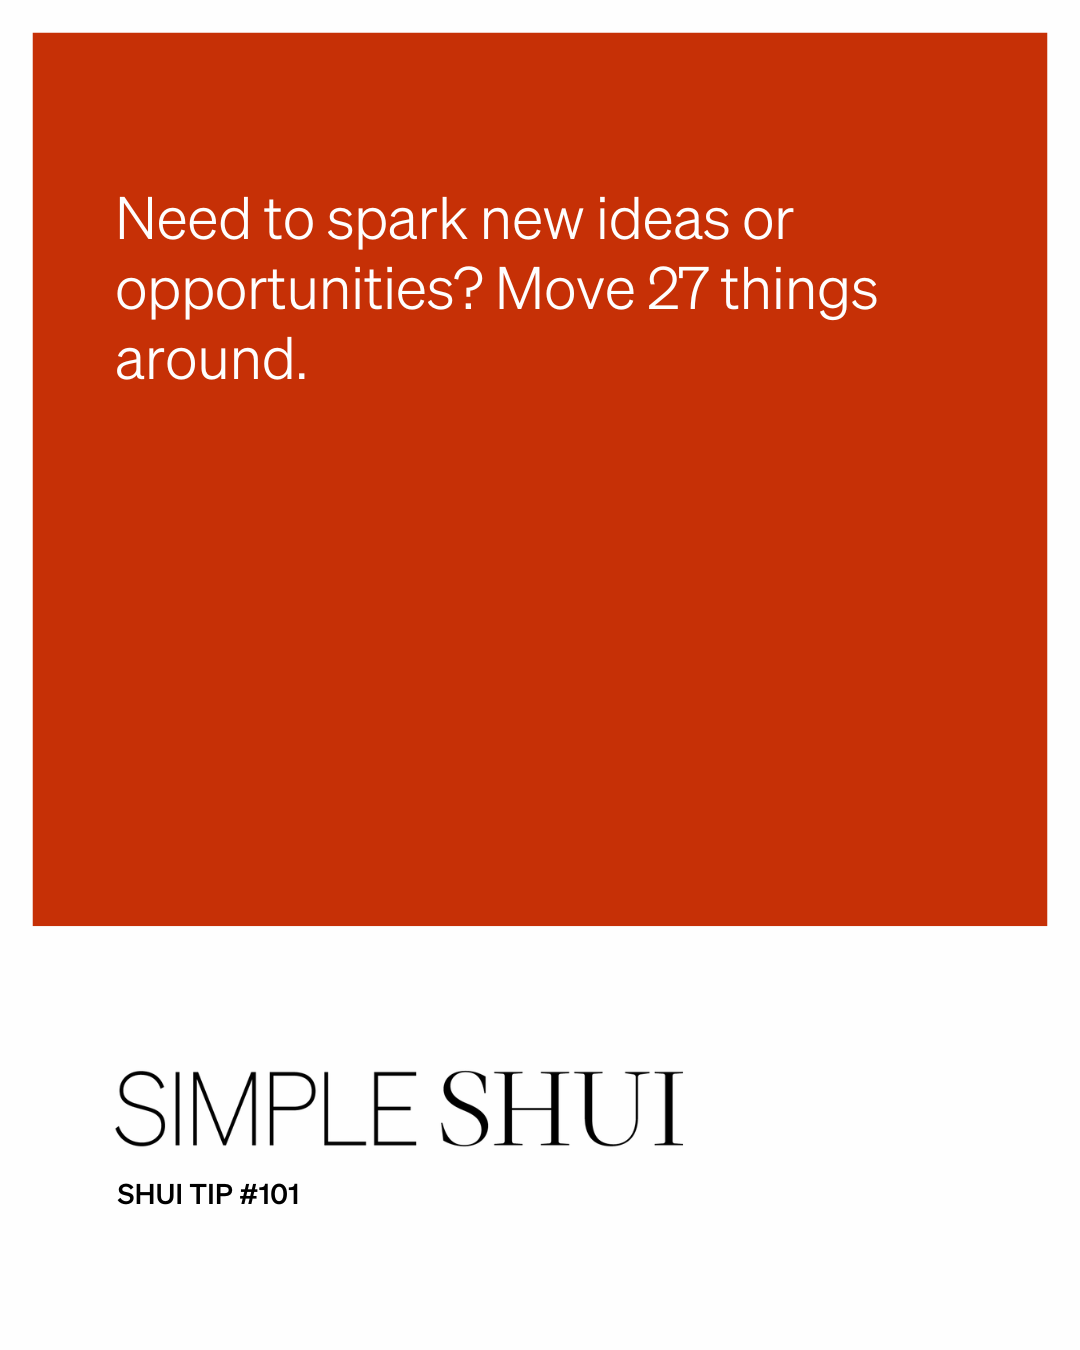 simple shui tip: move 27 things